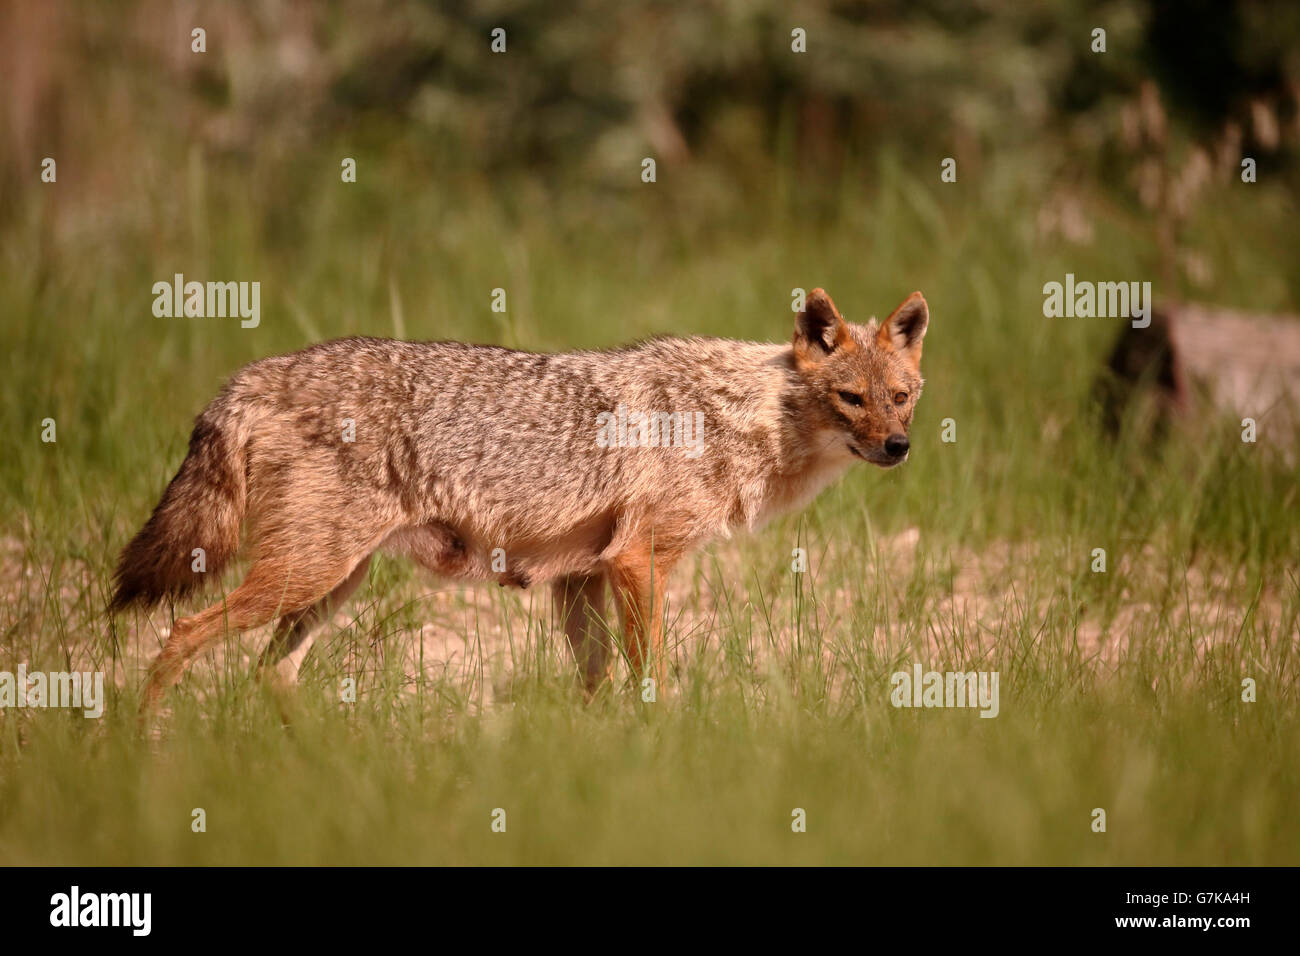 Jackal europea, Canis aureus moreoticus, unico mammifero su erba, Romania, Giugno 2016 Foto Stock